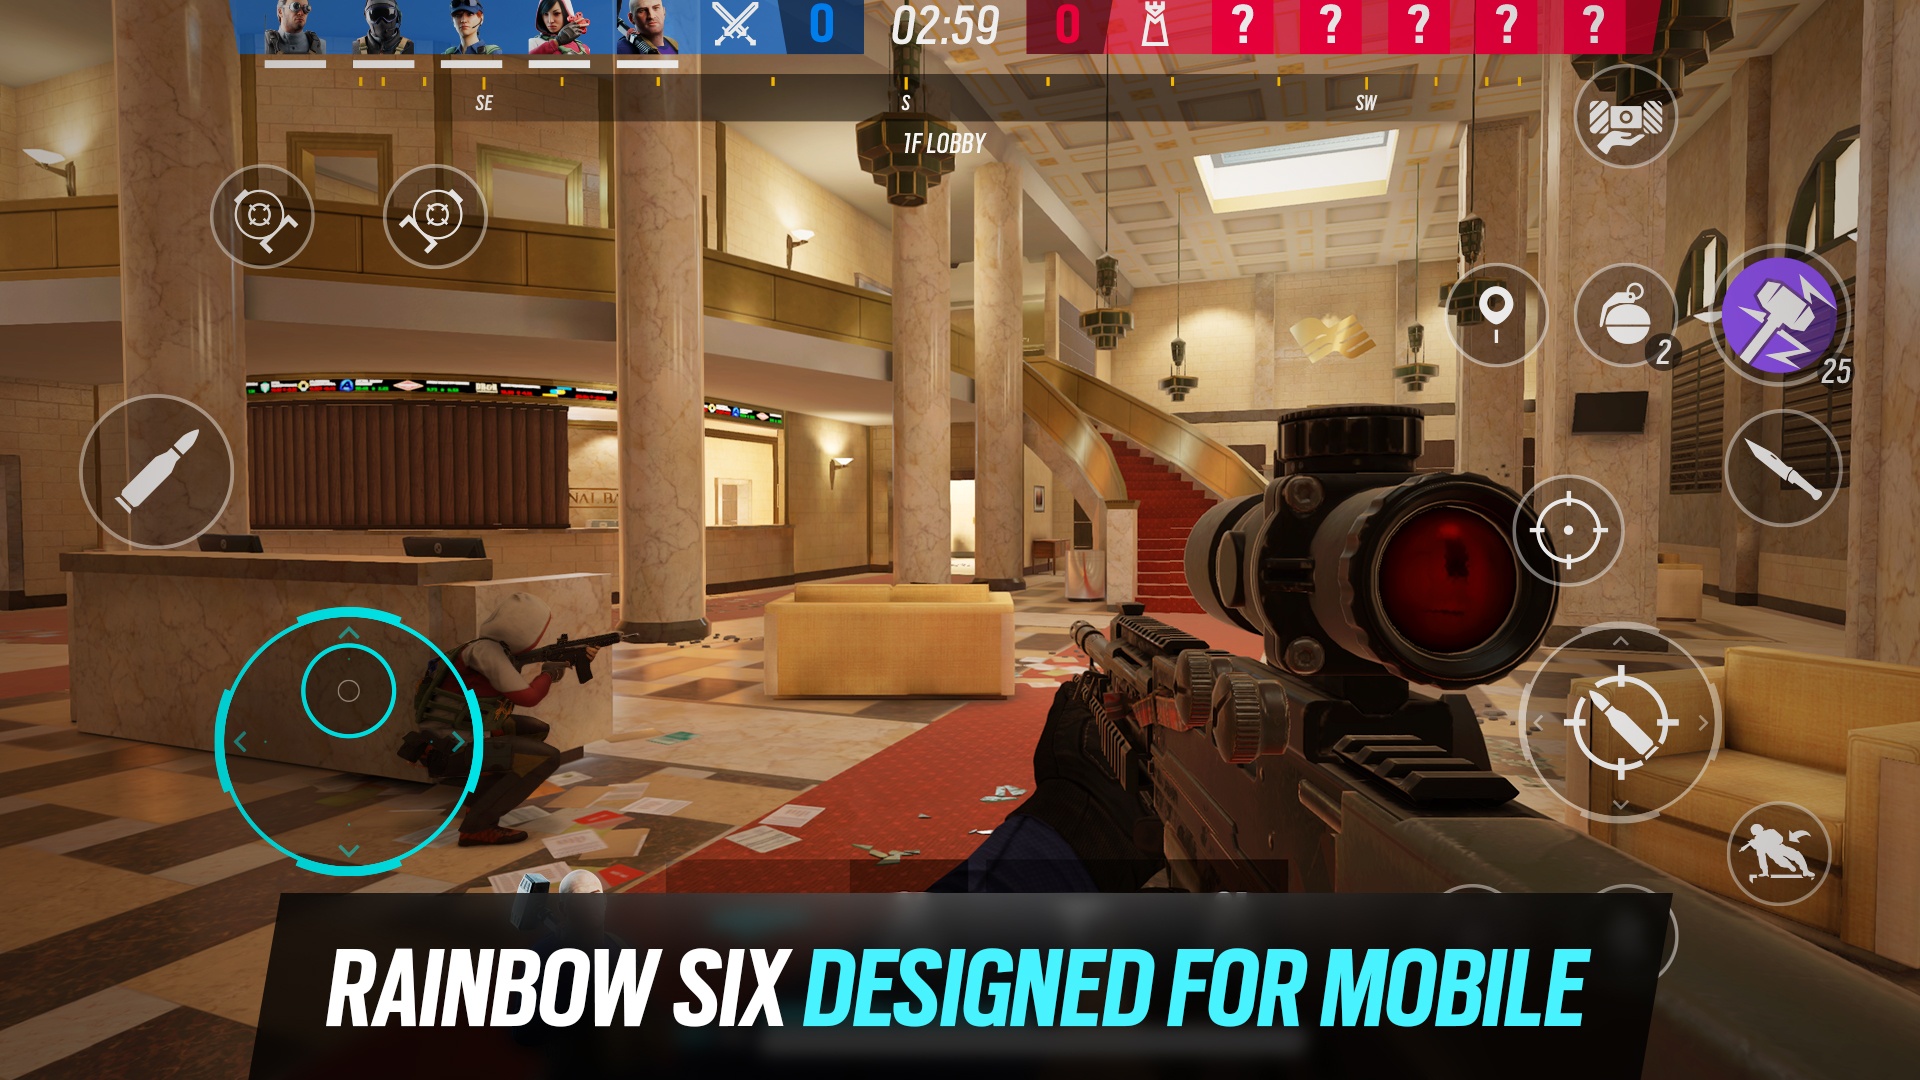 Rainbow 6 mobile. Rainbow Six Monile. Rainbow Six Siege mobile. R6 mobile